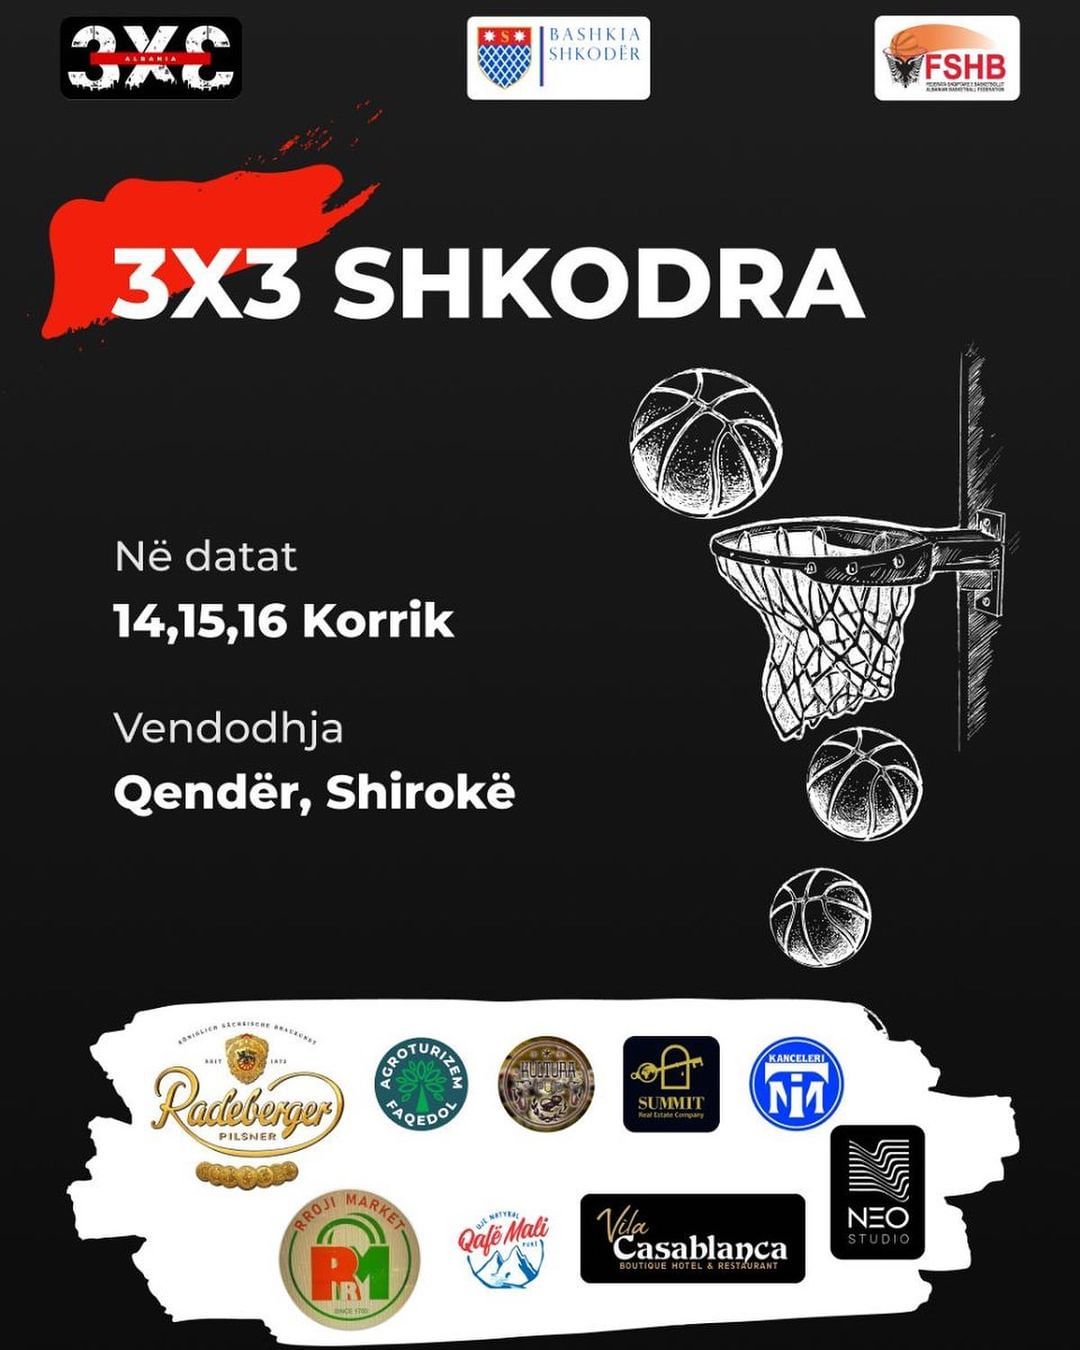 3X3 Shkodra